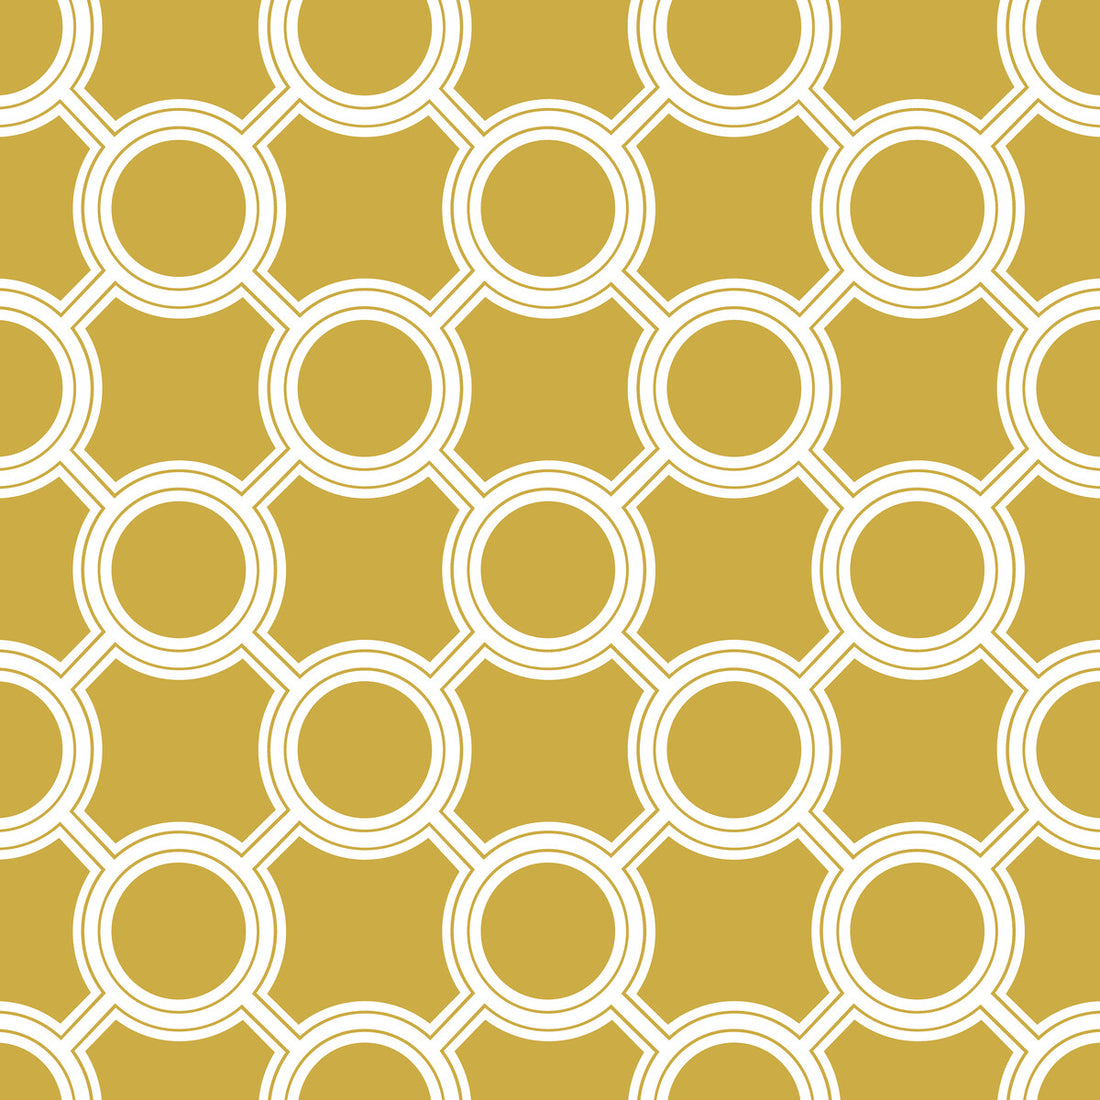 Aymara fabric in ocre color - pattern GDT5600.004.0 - by Gaston y Daniela in the Gaston Nuevo Mundo collection